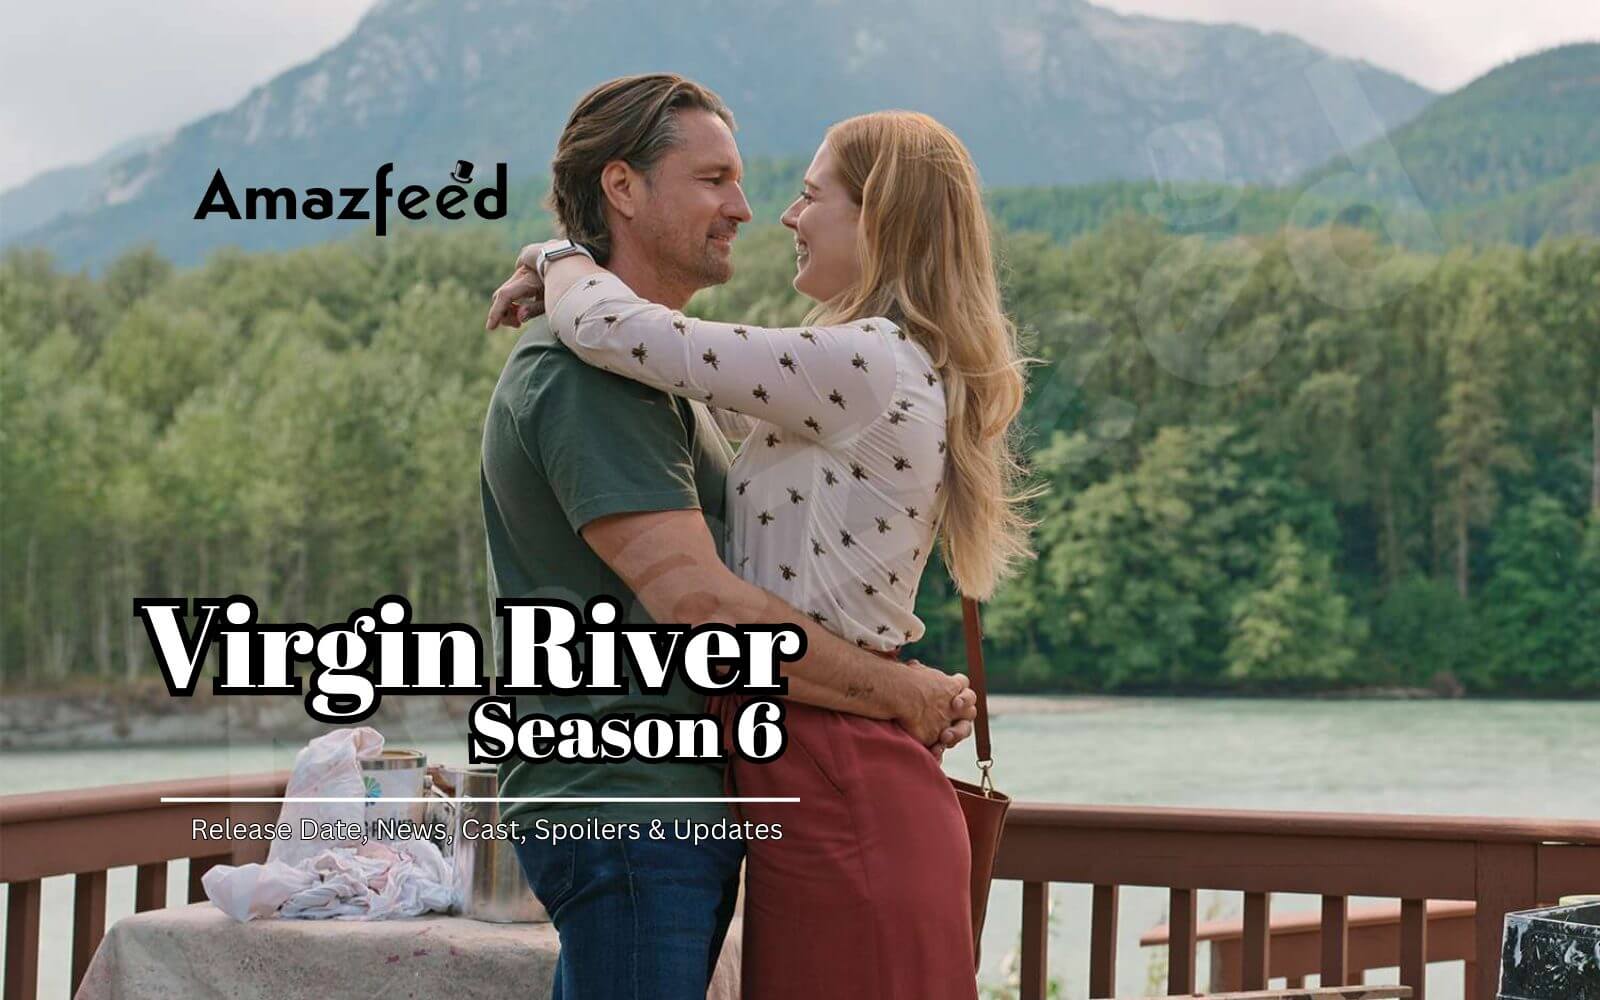 Virgin River Season 6 ⇒ Release Date, News, Cast, Spoilers & Updates